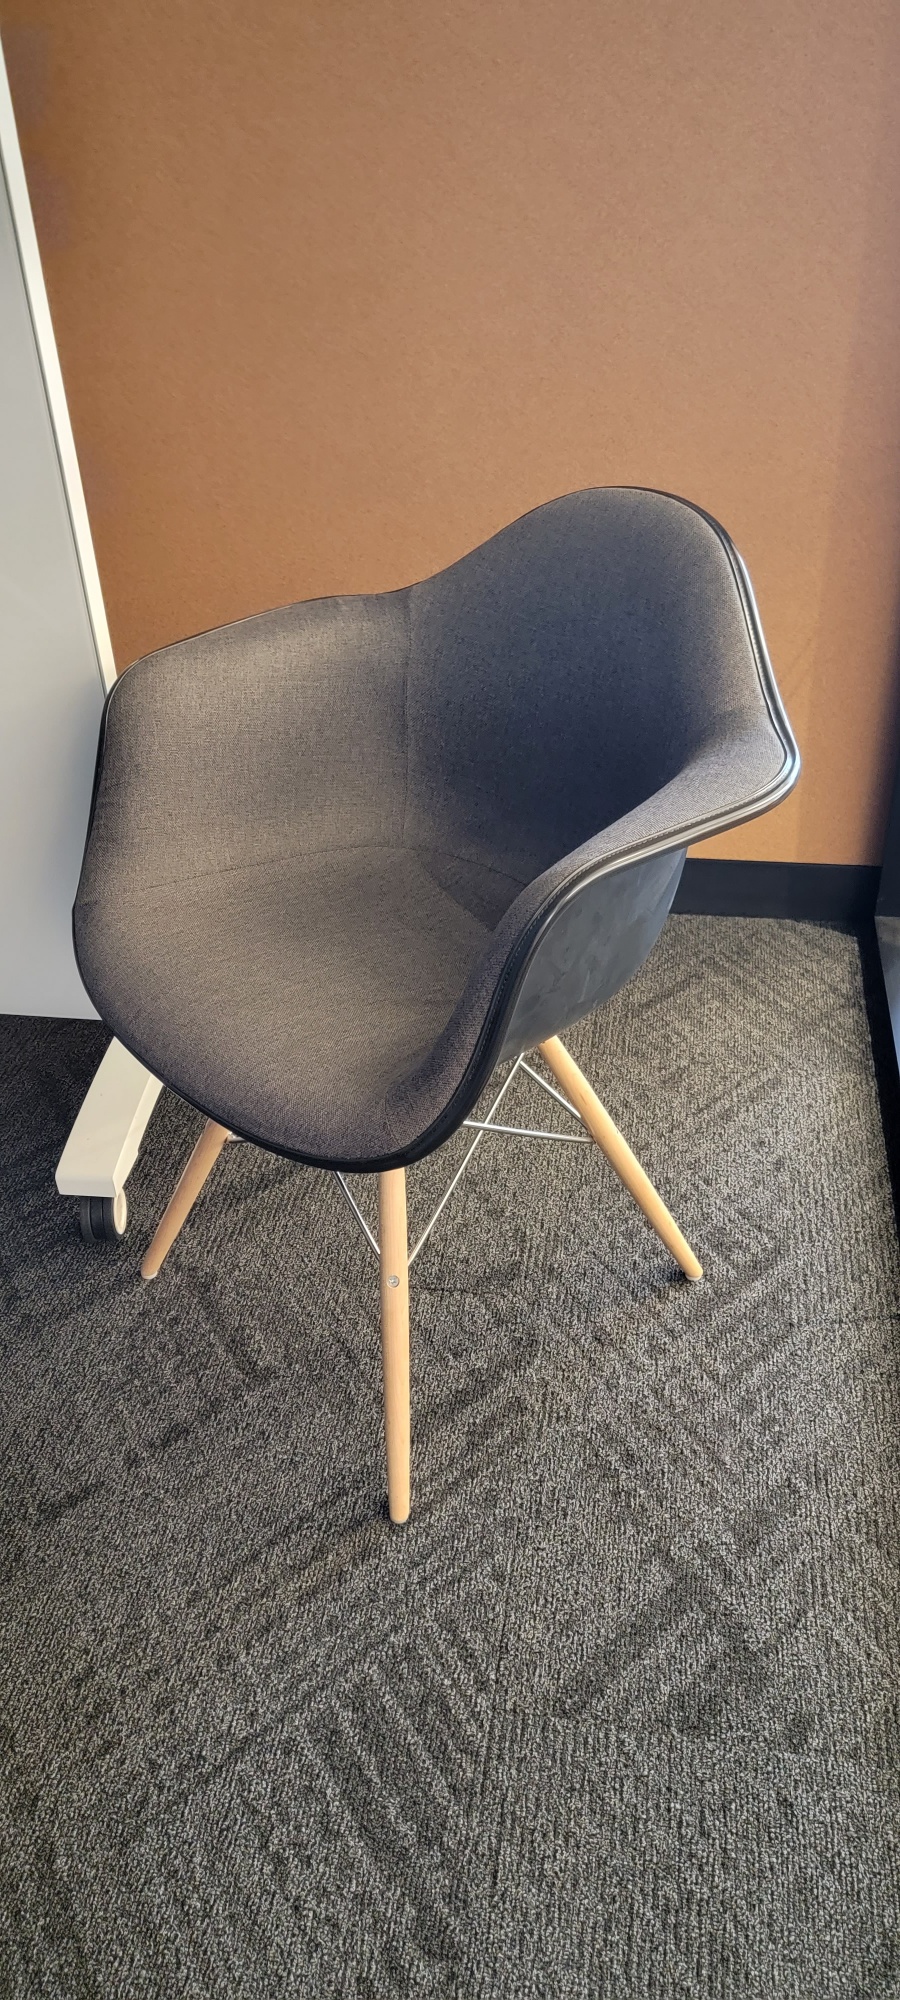 C61663 - Herman Miller Eames Bucket Chair